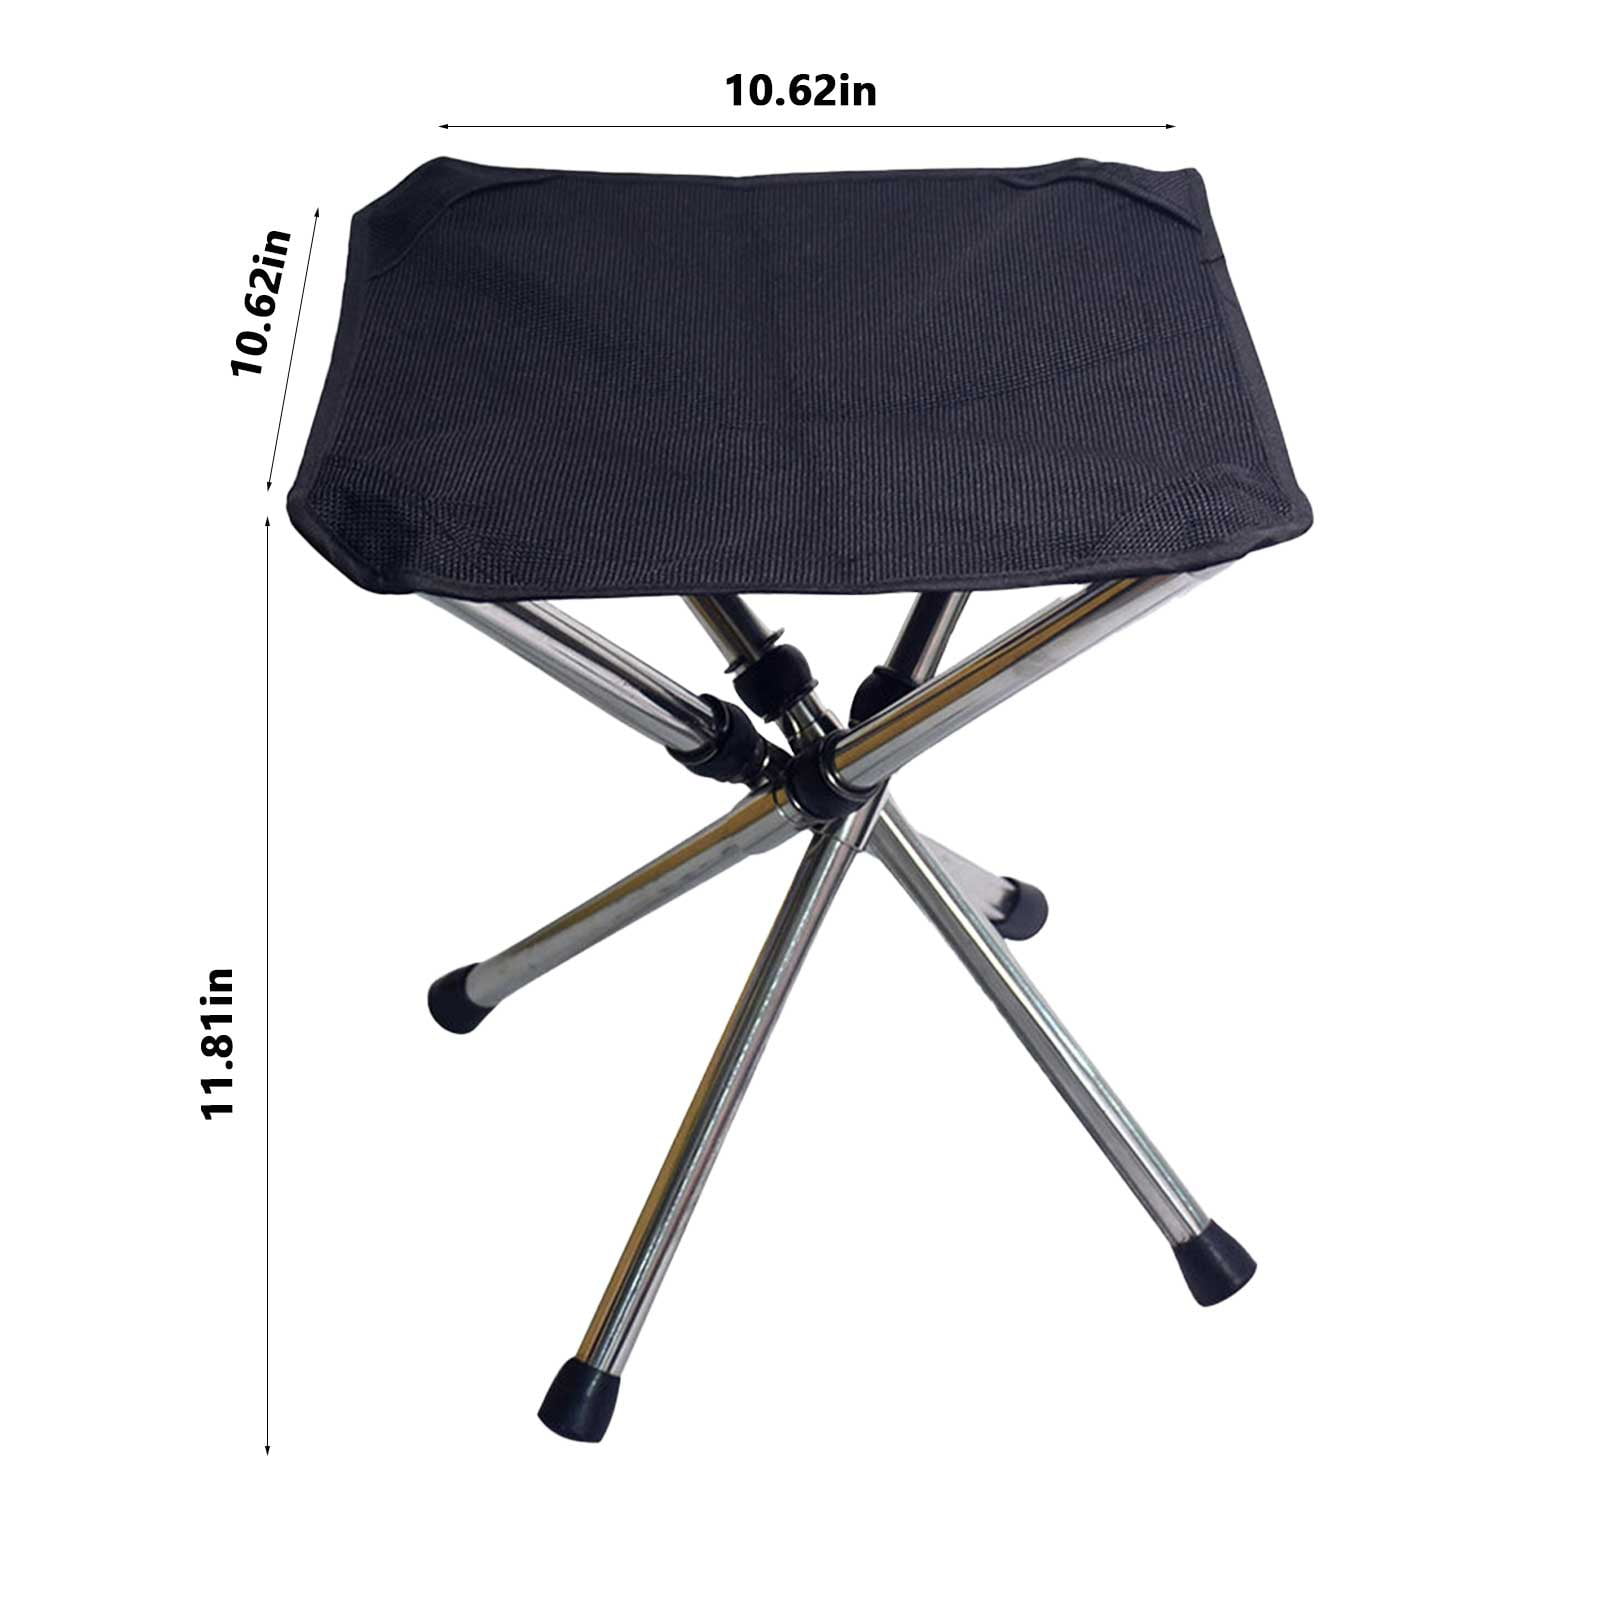 Shldybc Stainless Steel Telescopic Folding Stool Outdoor Folding Chair  Portable Fishing Stool Camping Stool Camping Mazar, Folding Chairs,  Summer Savings Clearance 